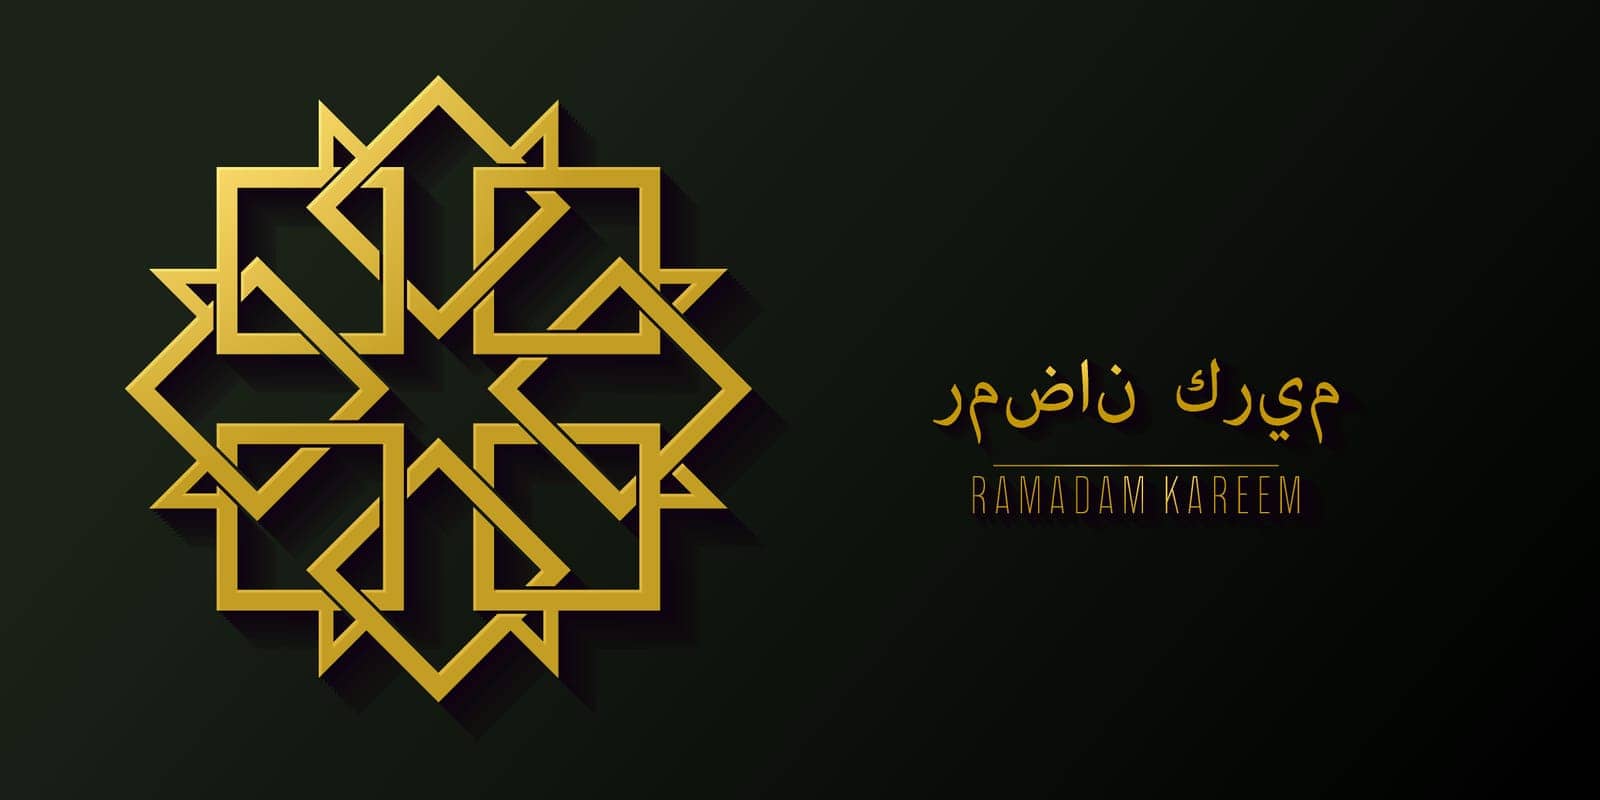 Golden islamic pattern geometric symbol.
Ramadan kareem oriental style vector template. 